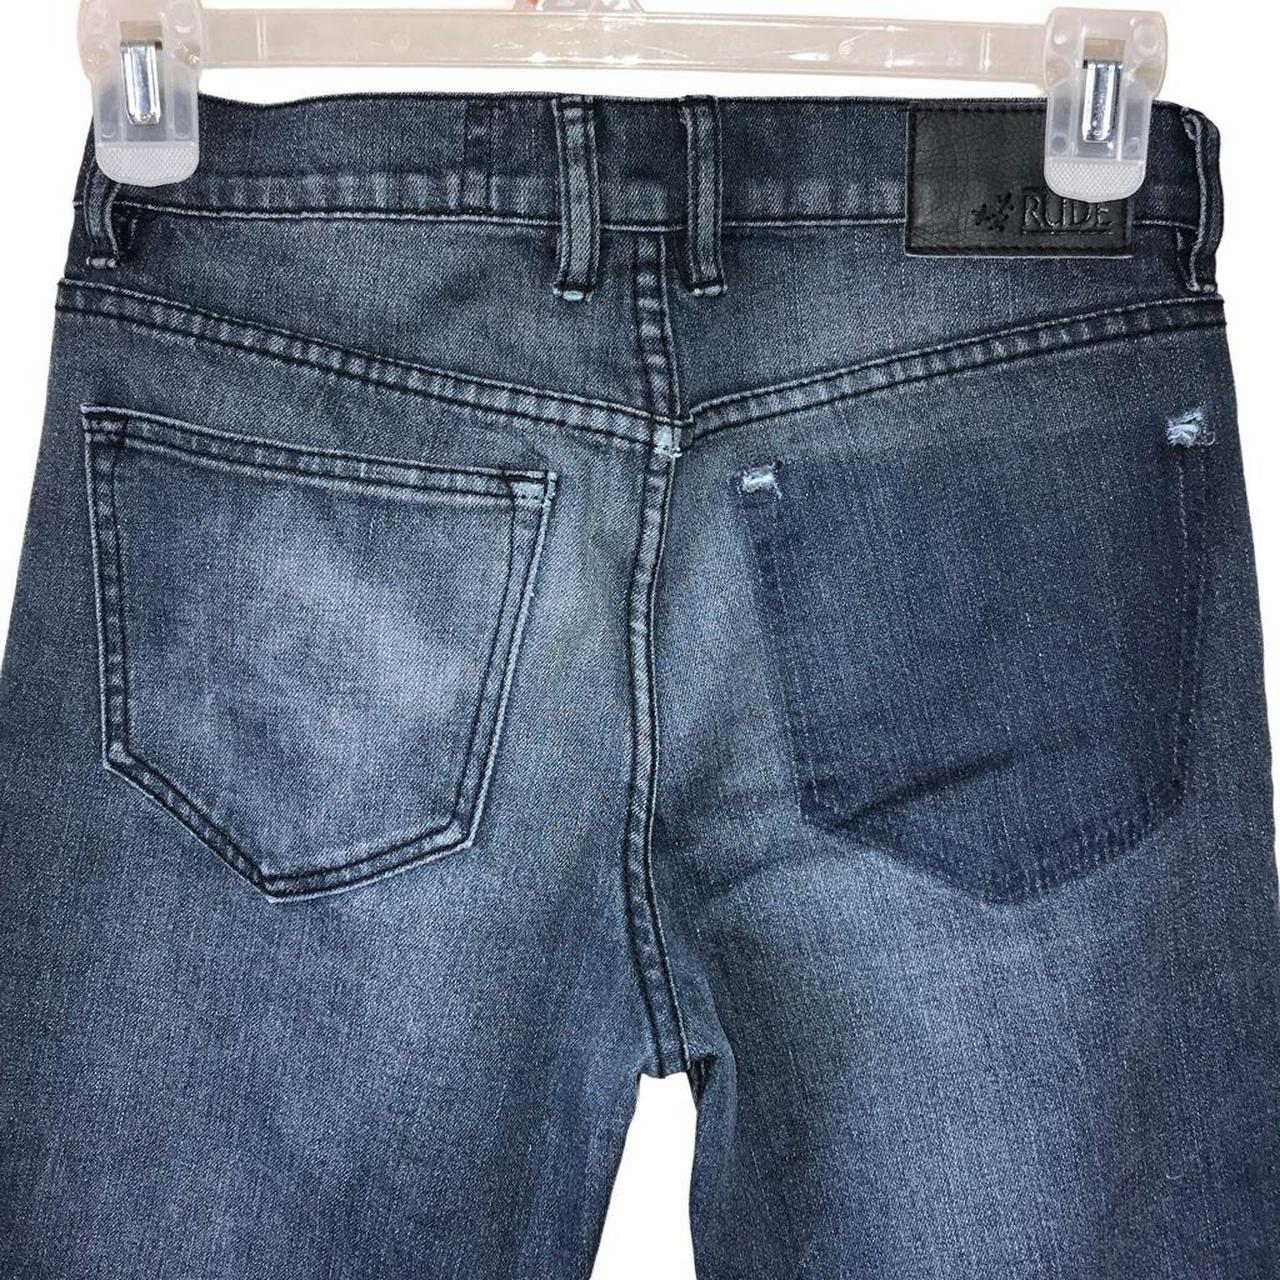 Product Image 1 - Rude XXX mens denim jeans